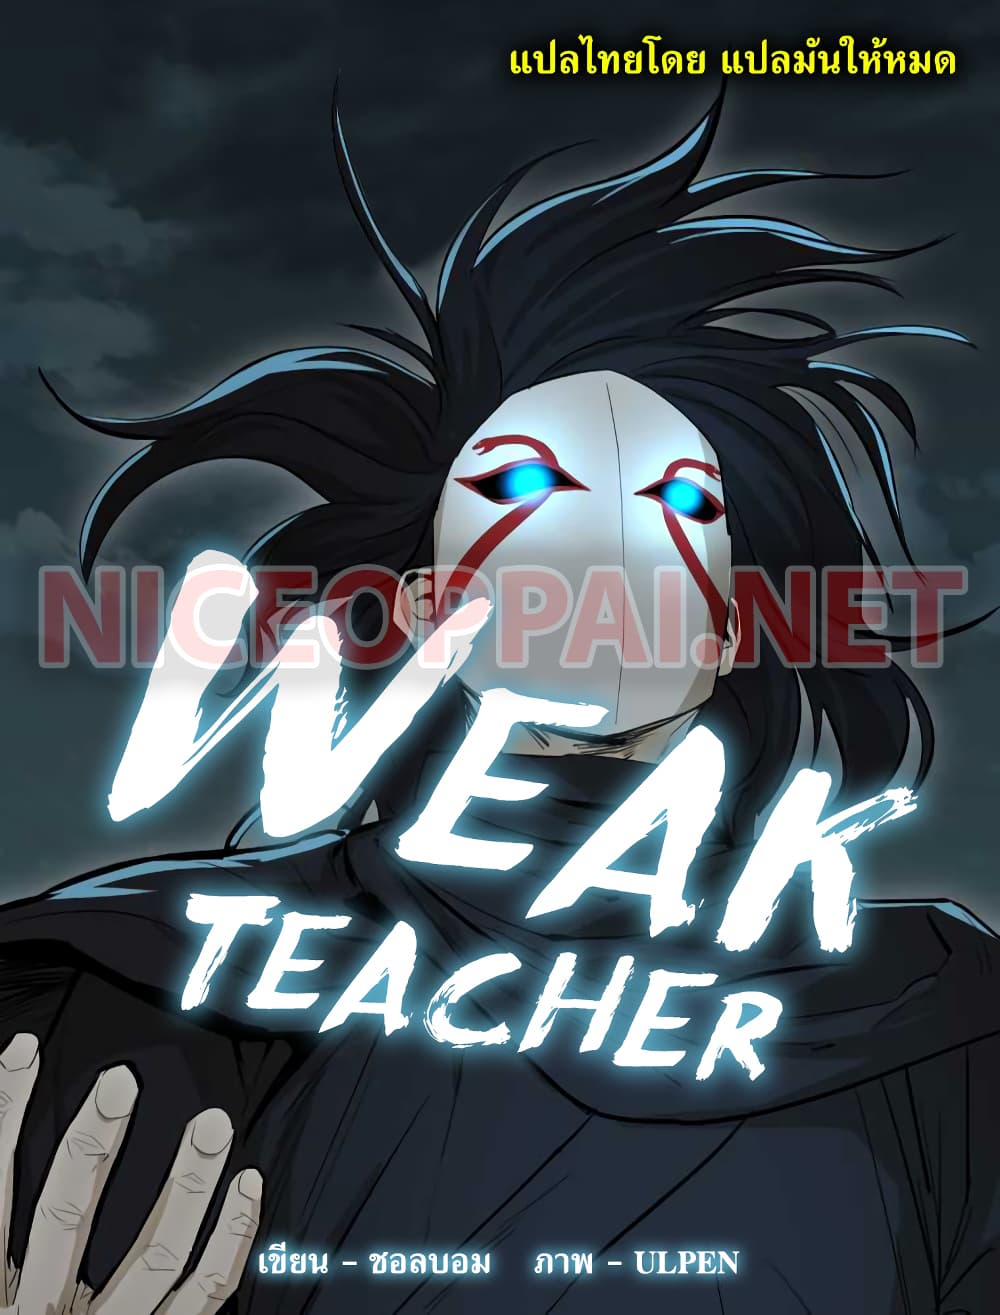 weak-teacher-9-1.jpg